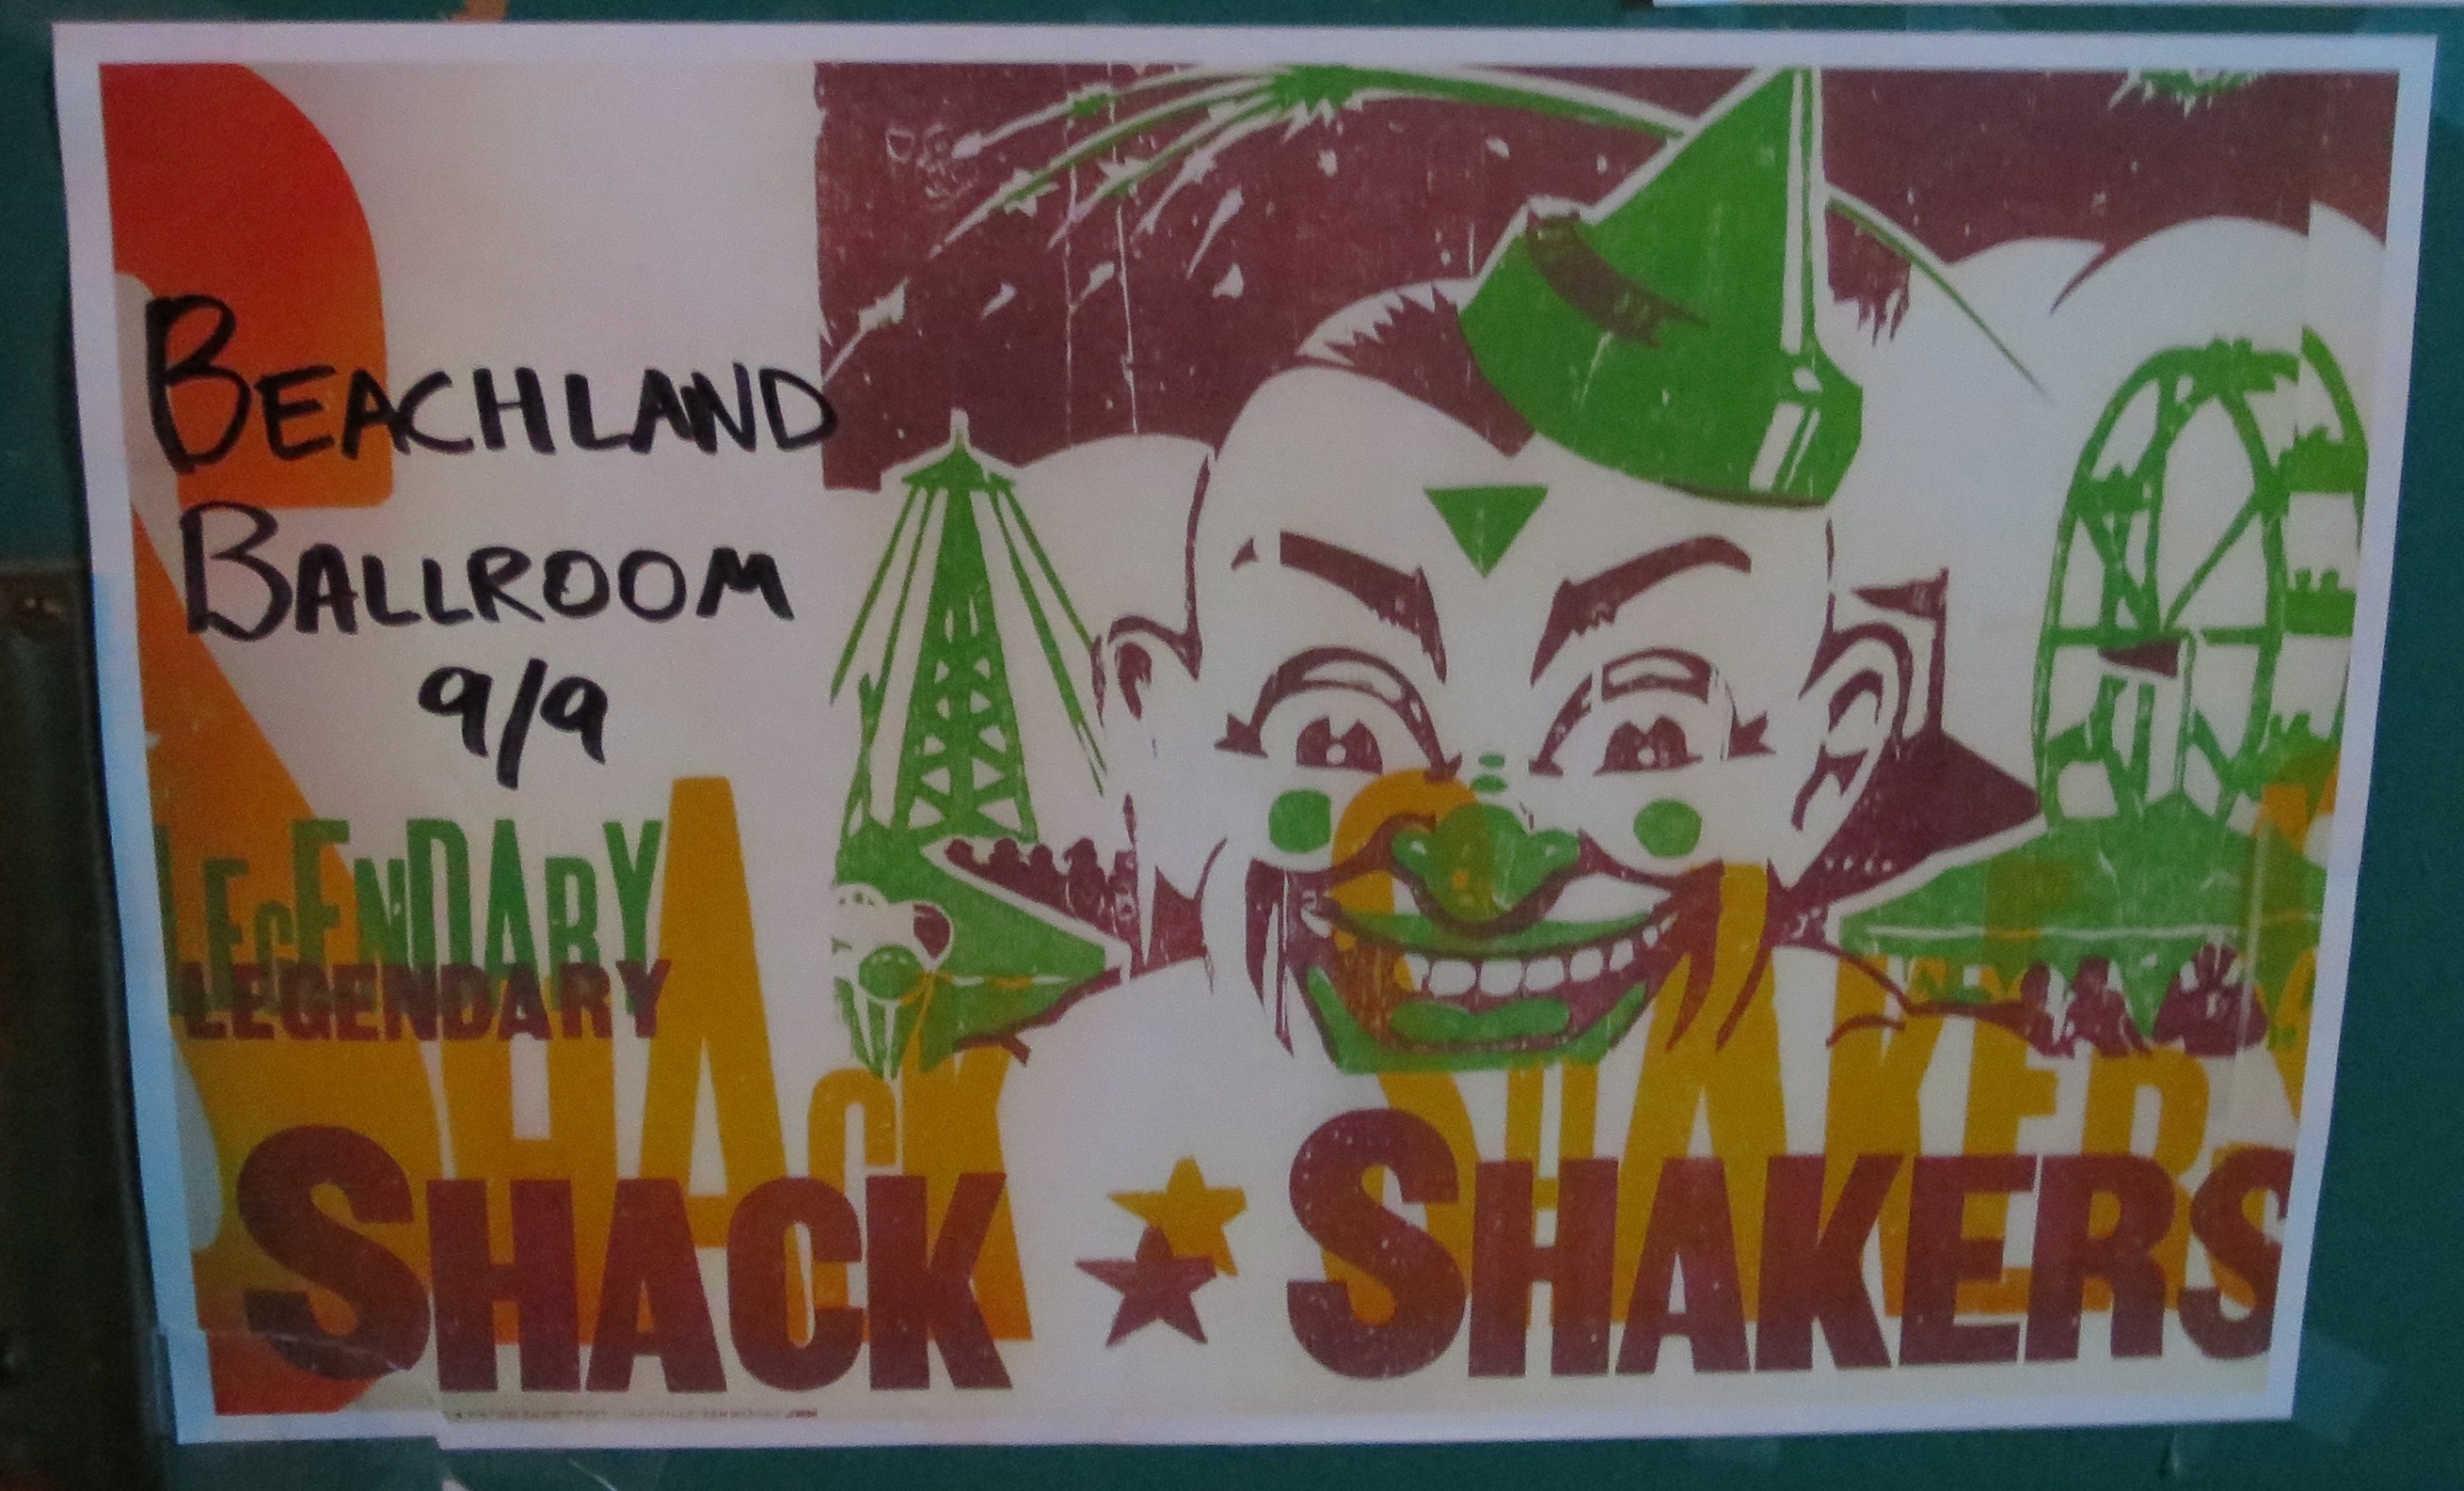 LegendaryShackShakers2014-09-09BeachlandBallroomCleveland (1).jpg